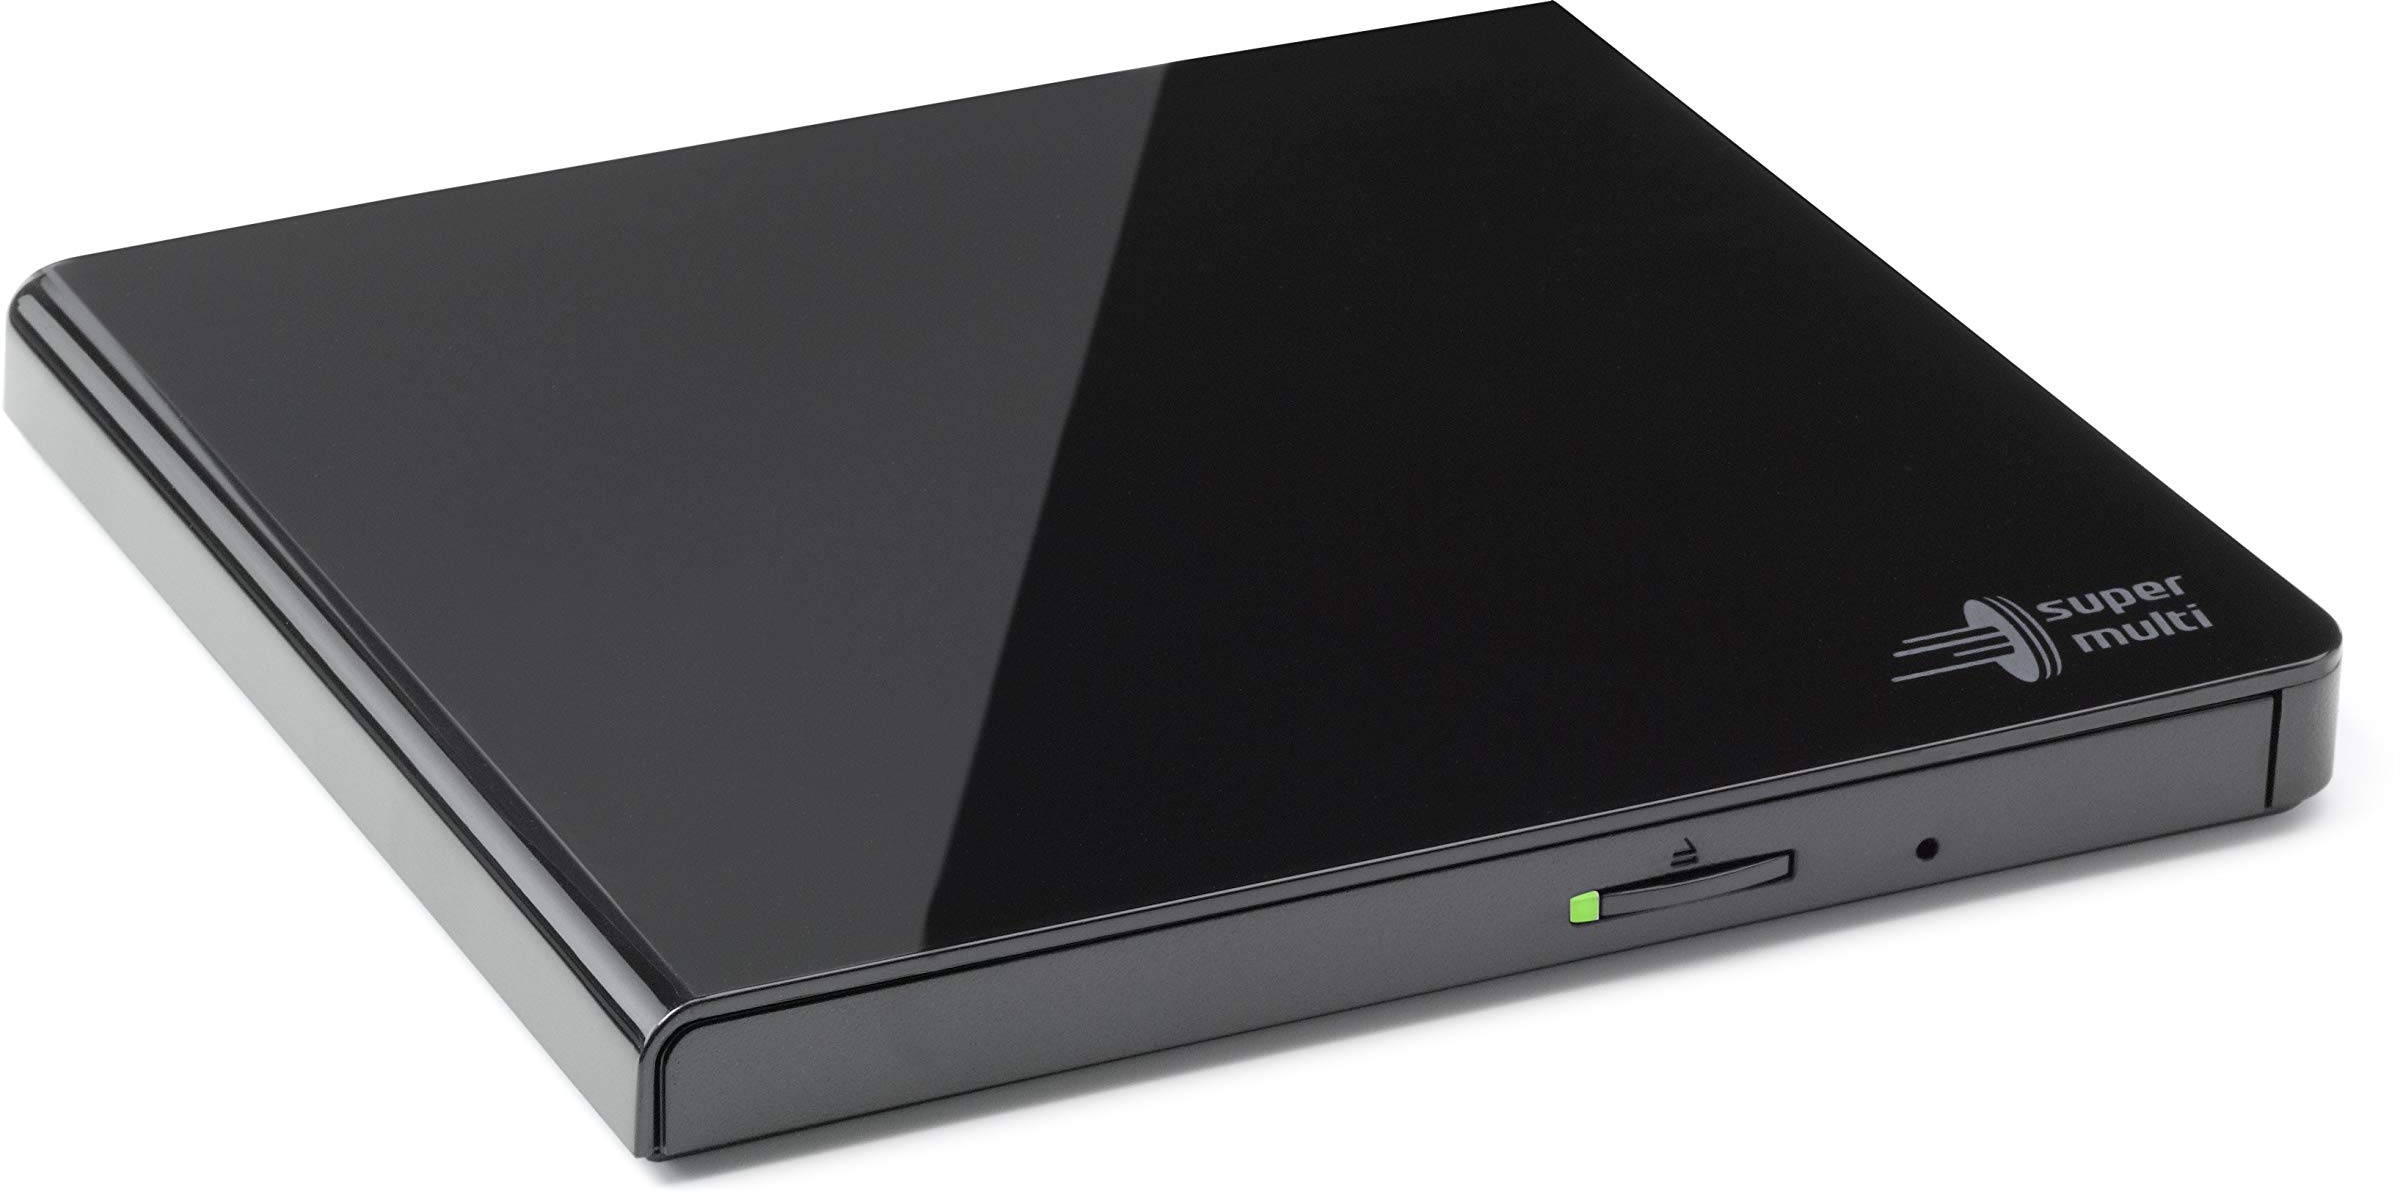 Hitachi-LG GP57 Externer Portabler Super-Multi DVD-Brenner, Ultra Slim, USB 2.0, DVD+/-RW, CD-RW, DVD-ROM/RAM kompatibel, TV-Anschluss, Windows 10 & Mac OS kompatibel, Schwarz